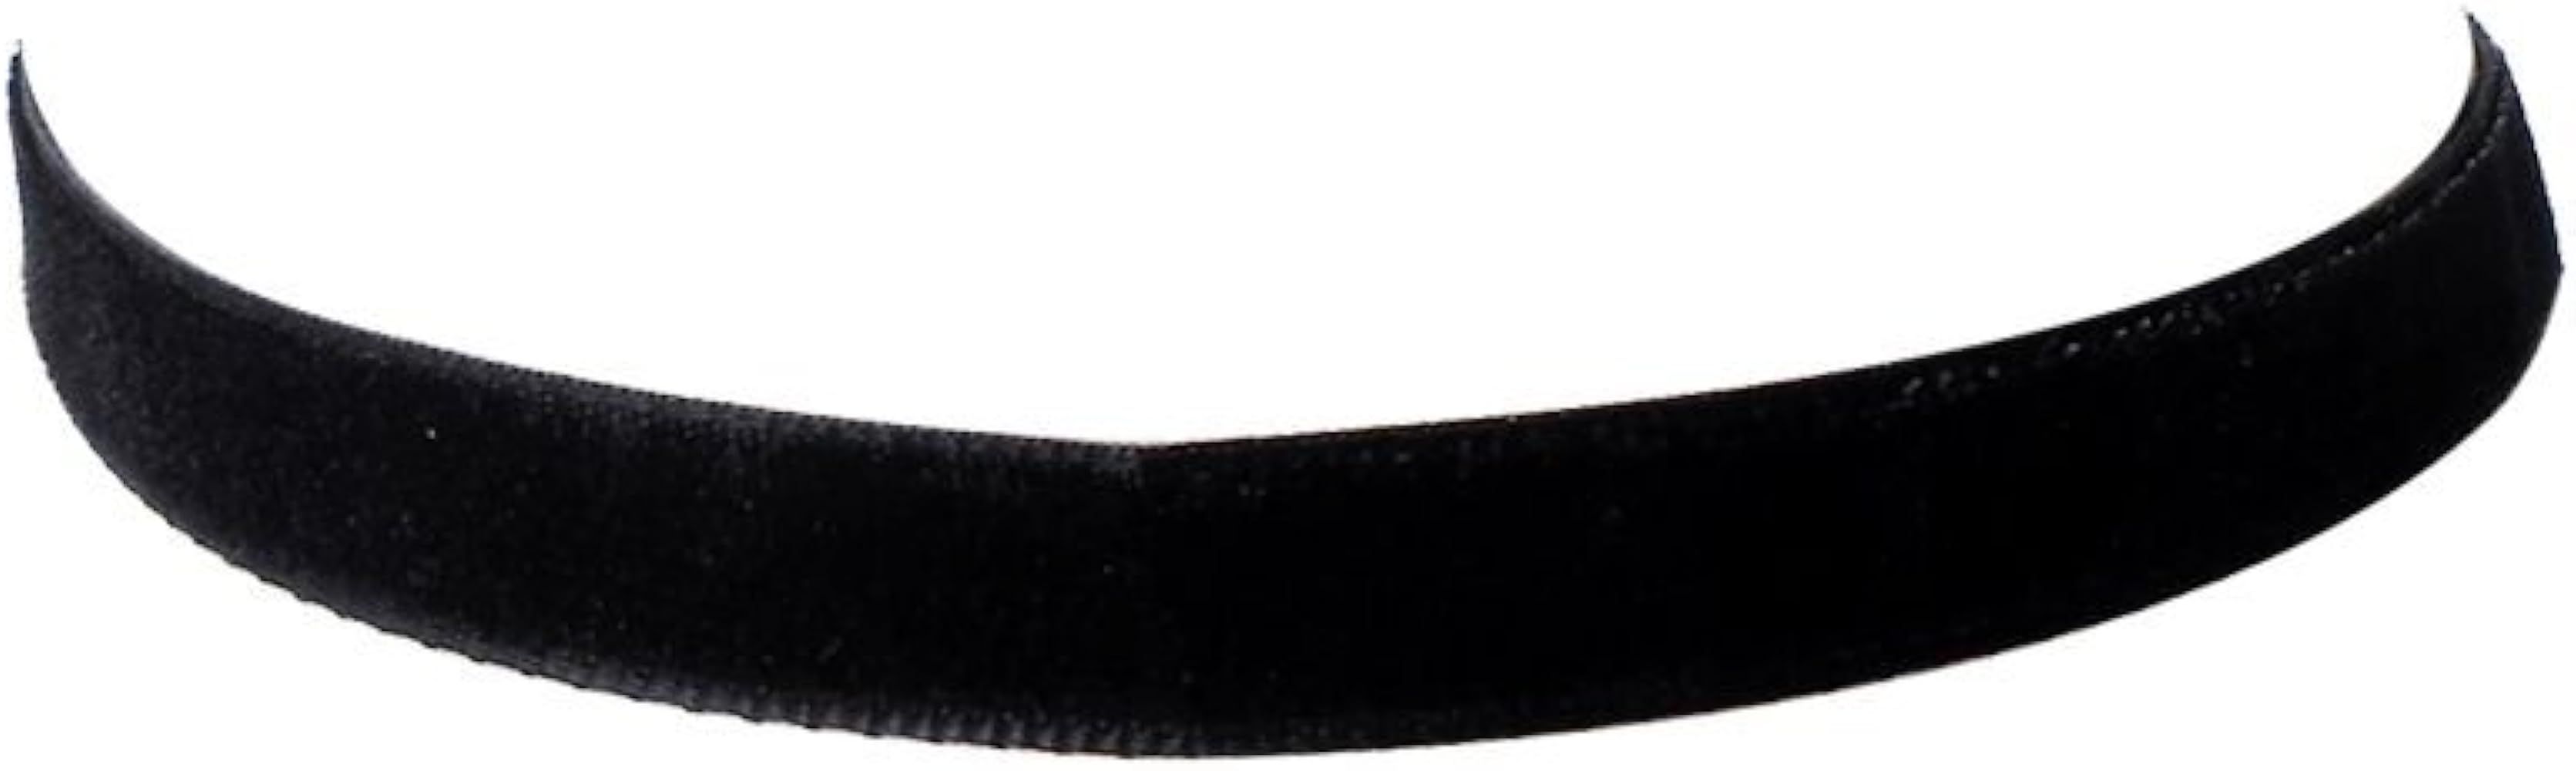 RareLove Classic Black Velvet 10mm Choker Necklace | Amazon (US)